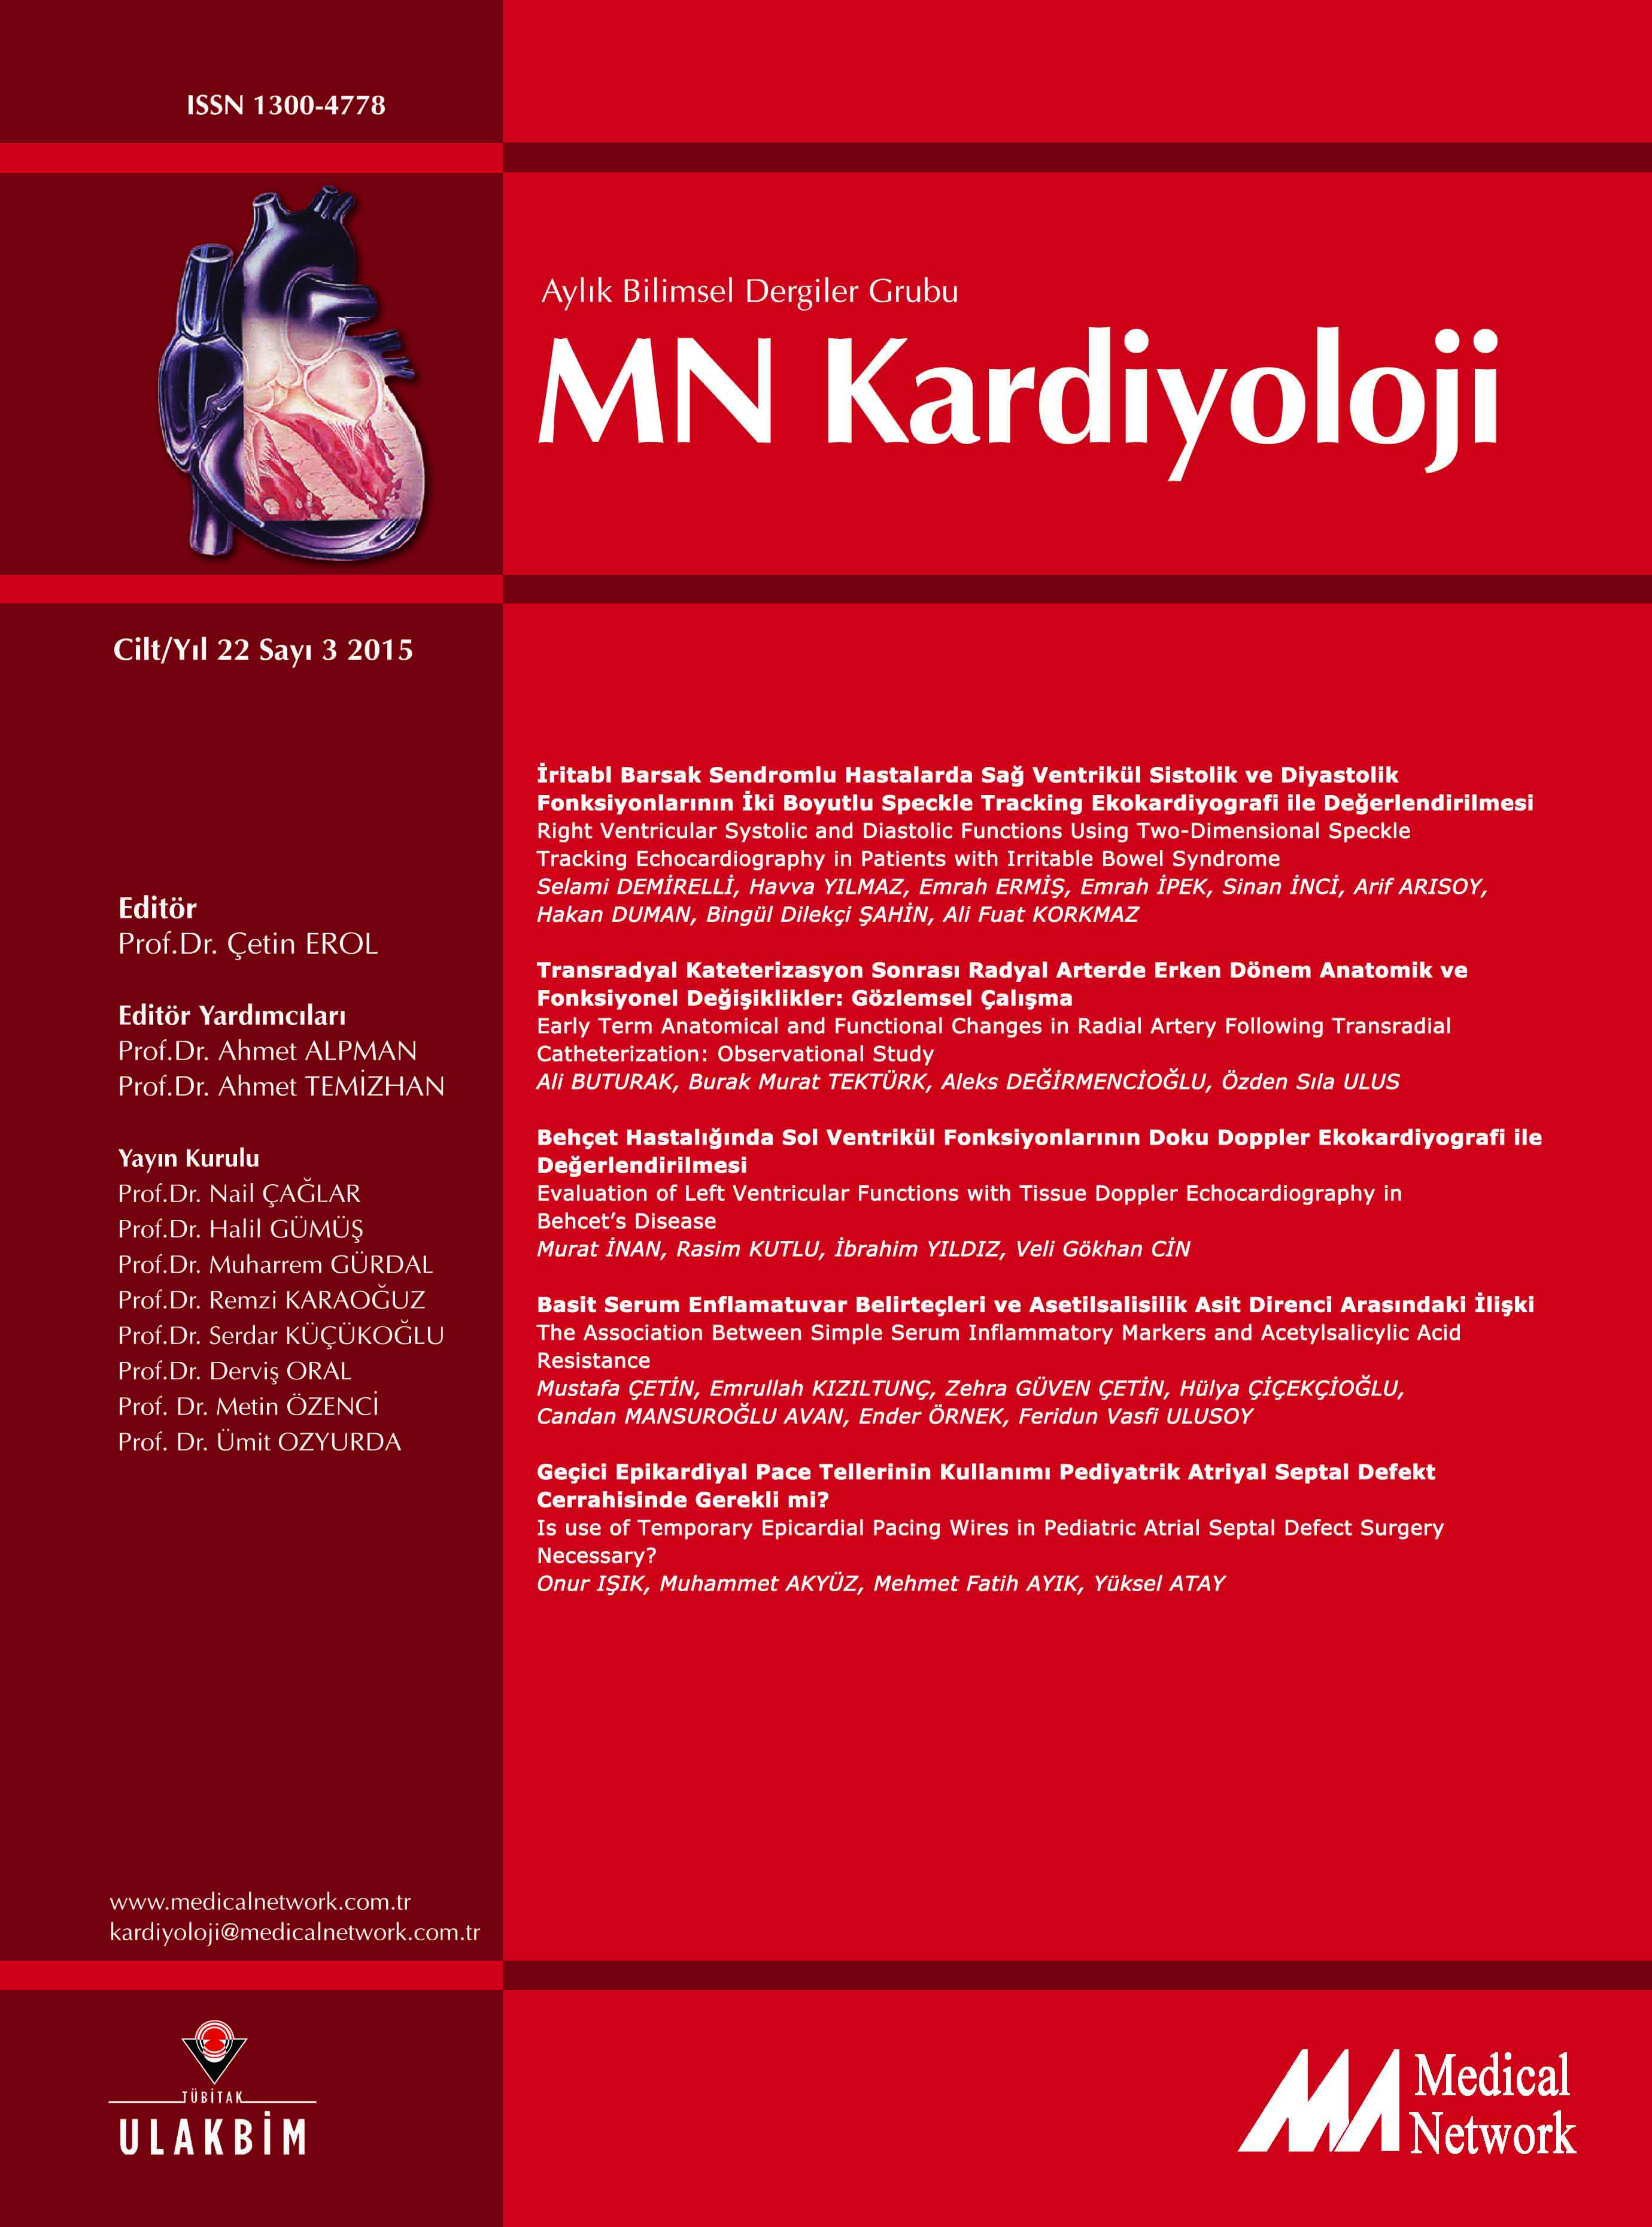 <p>MN Kardiyoloji Cilt: 22 Sayı: 3 2015 (MN Cardiology Volume: 22 No: 3 2015)</p>